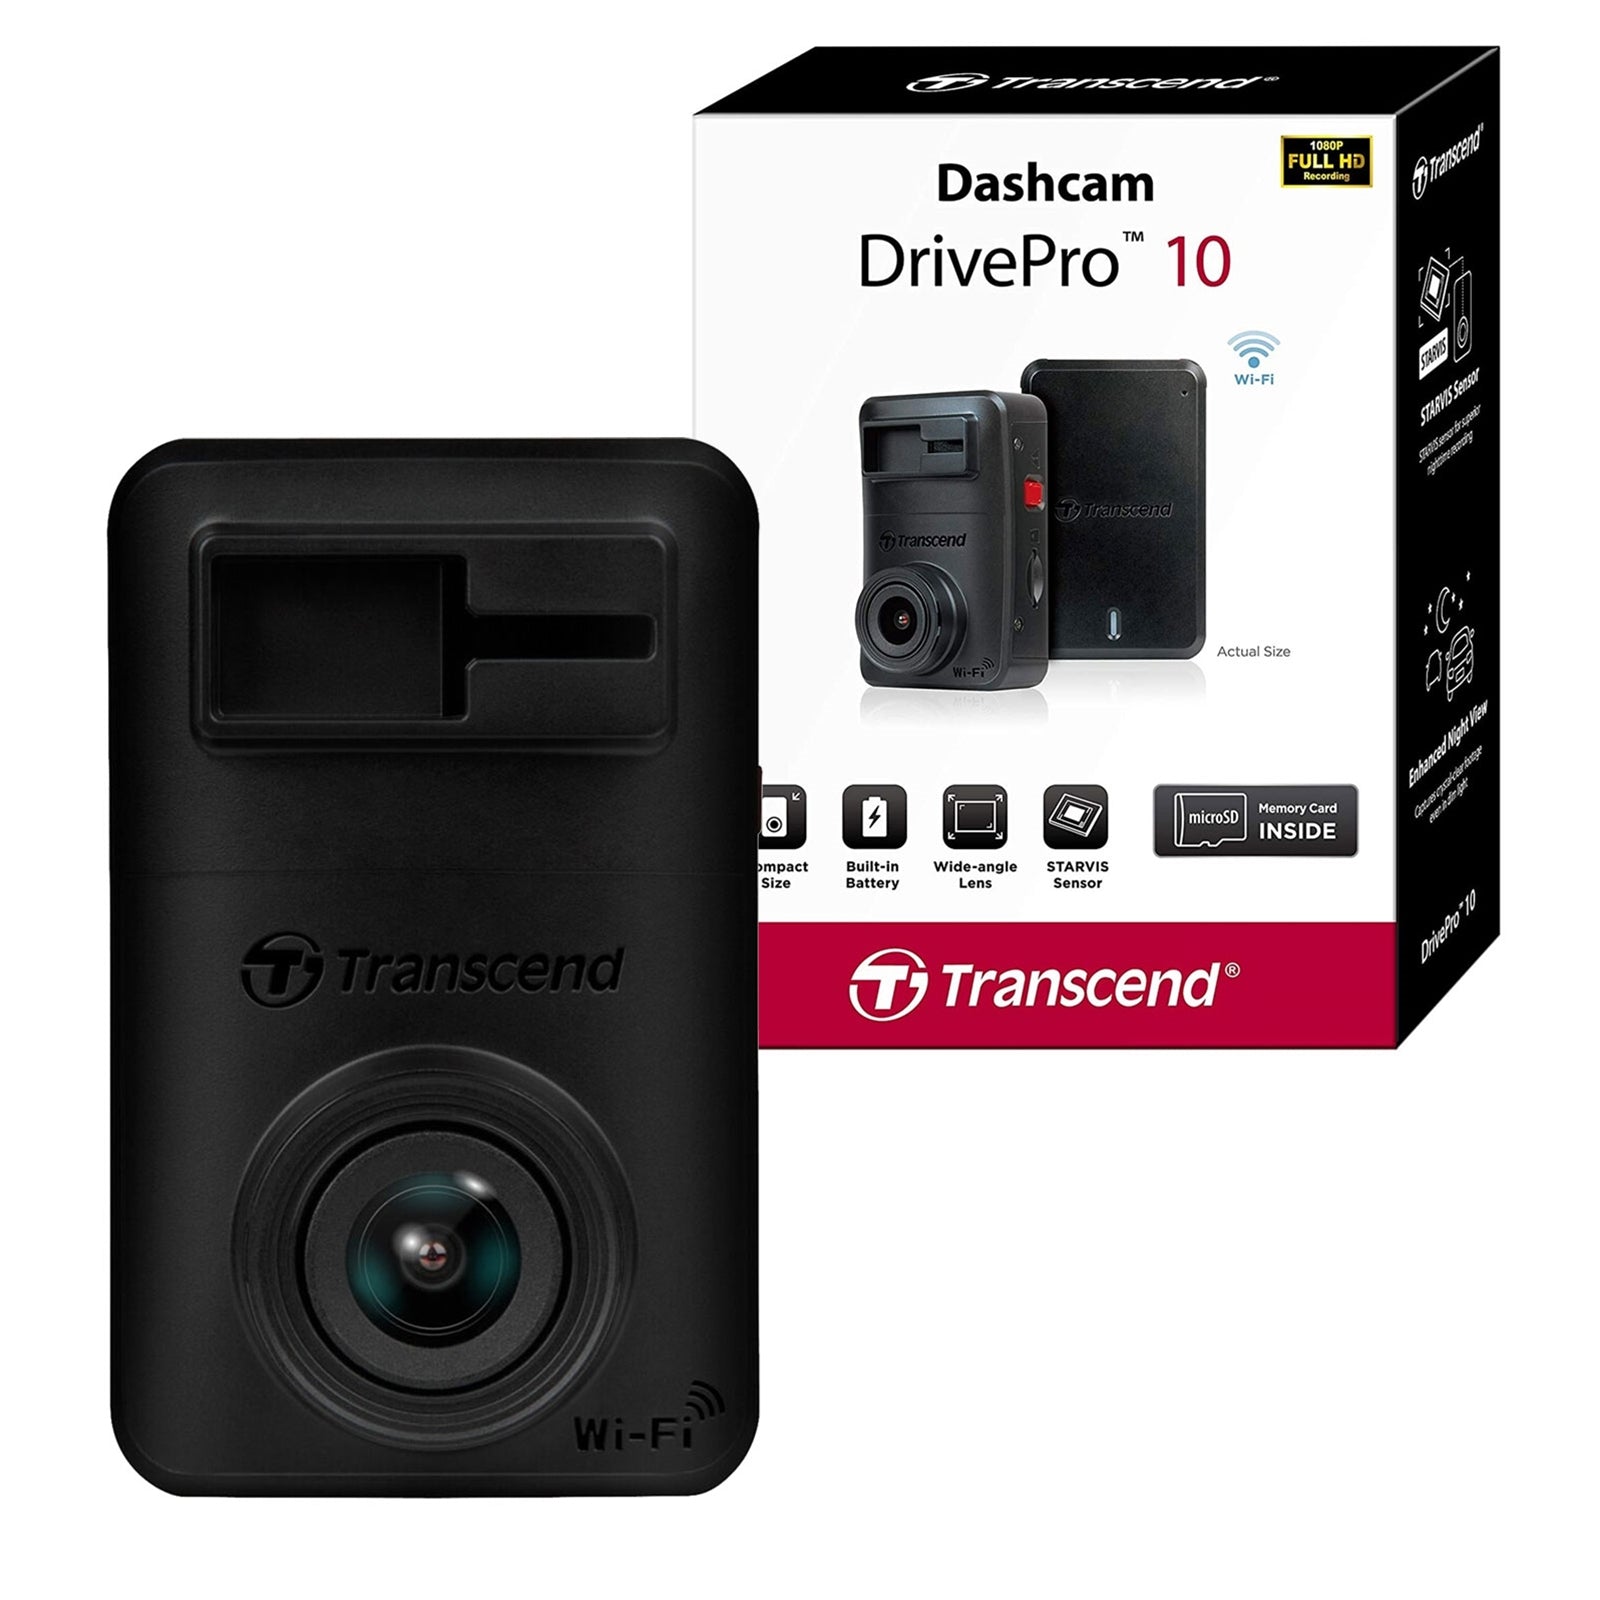 Transcend DrivePro Dash Cams